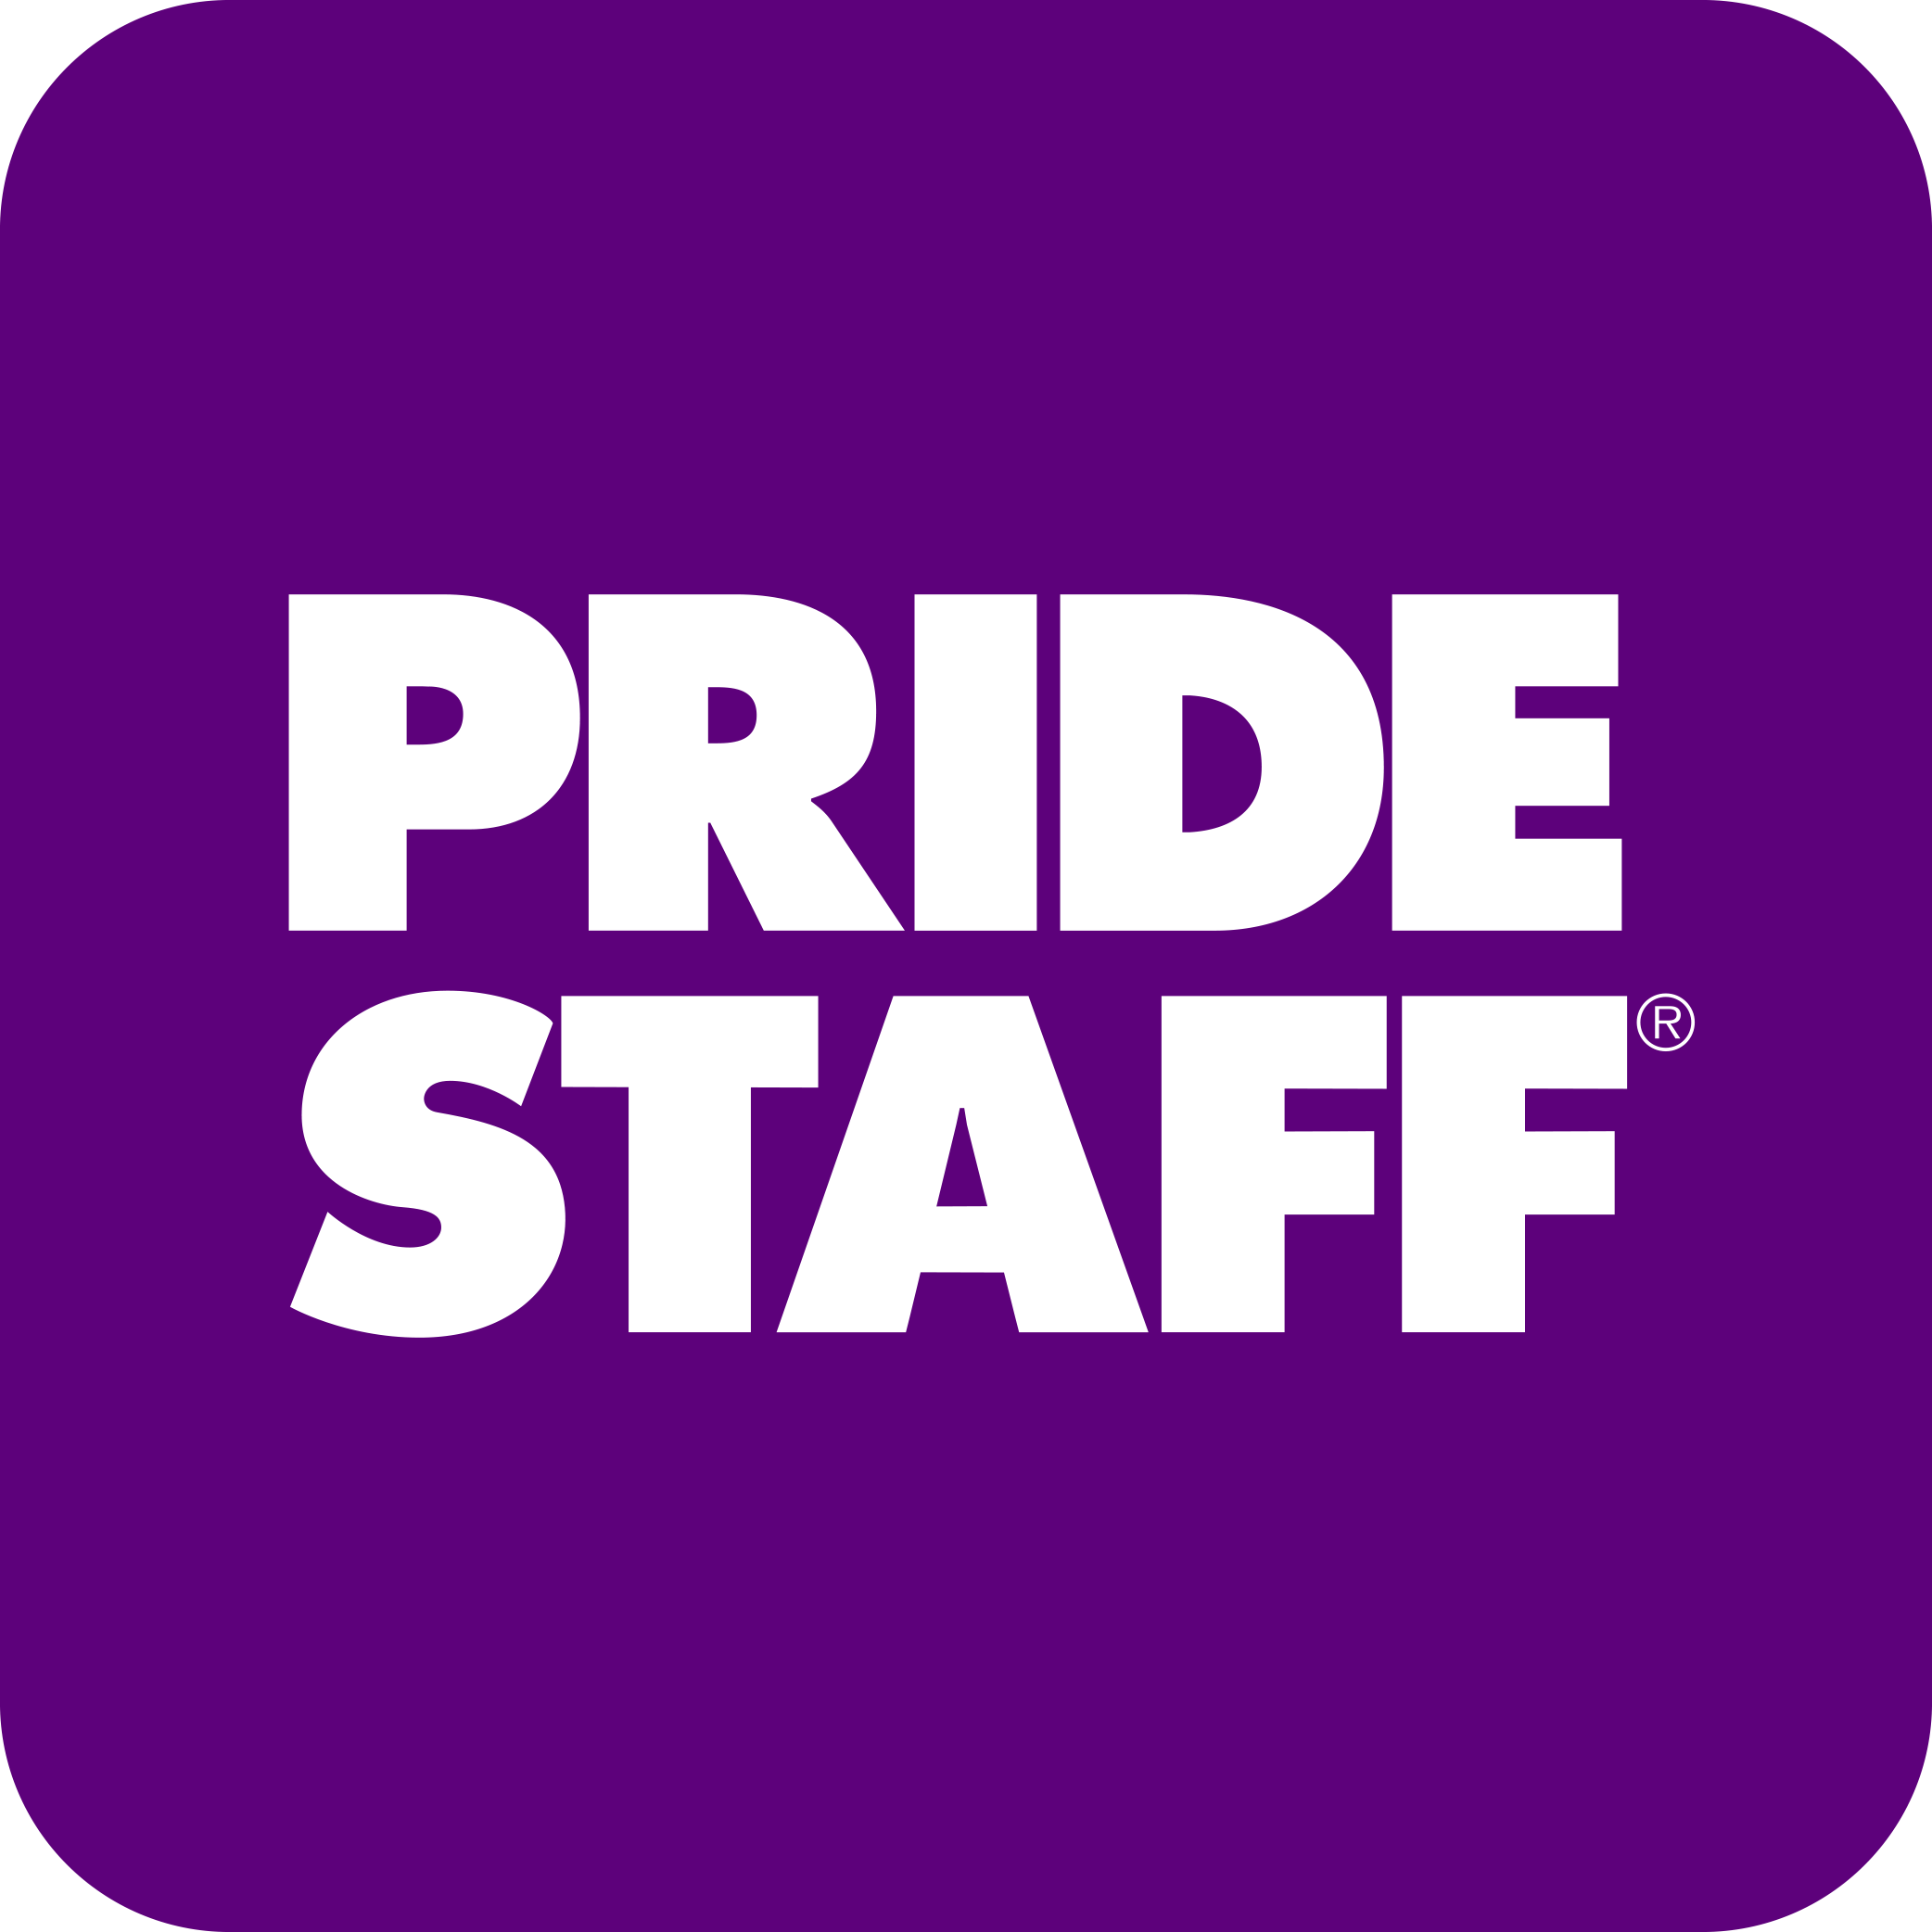 PrideStaff Rounded Square logo